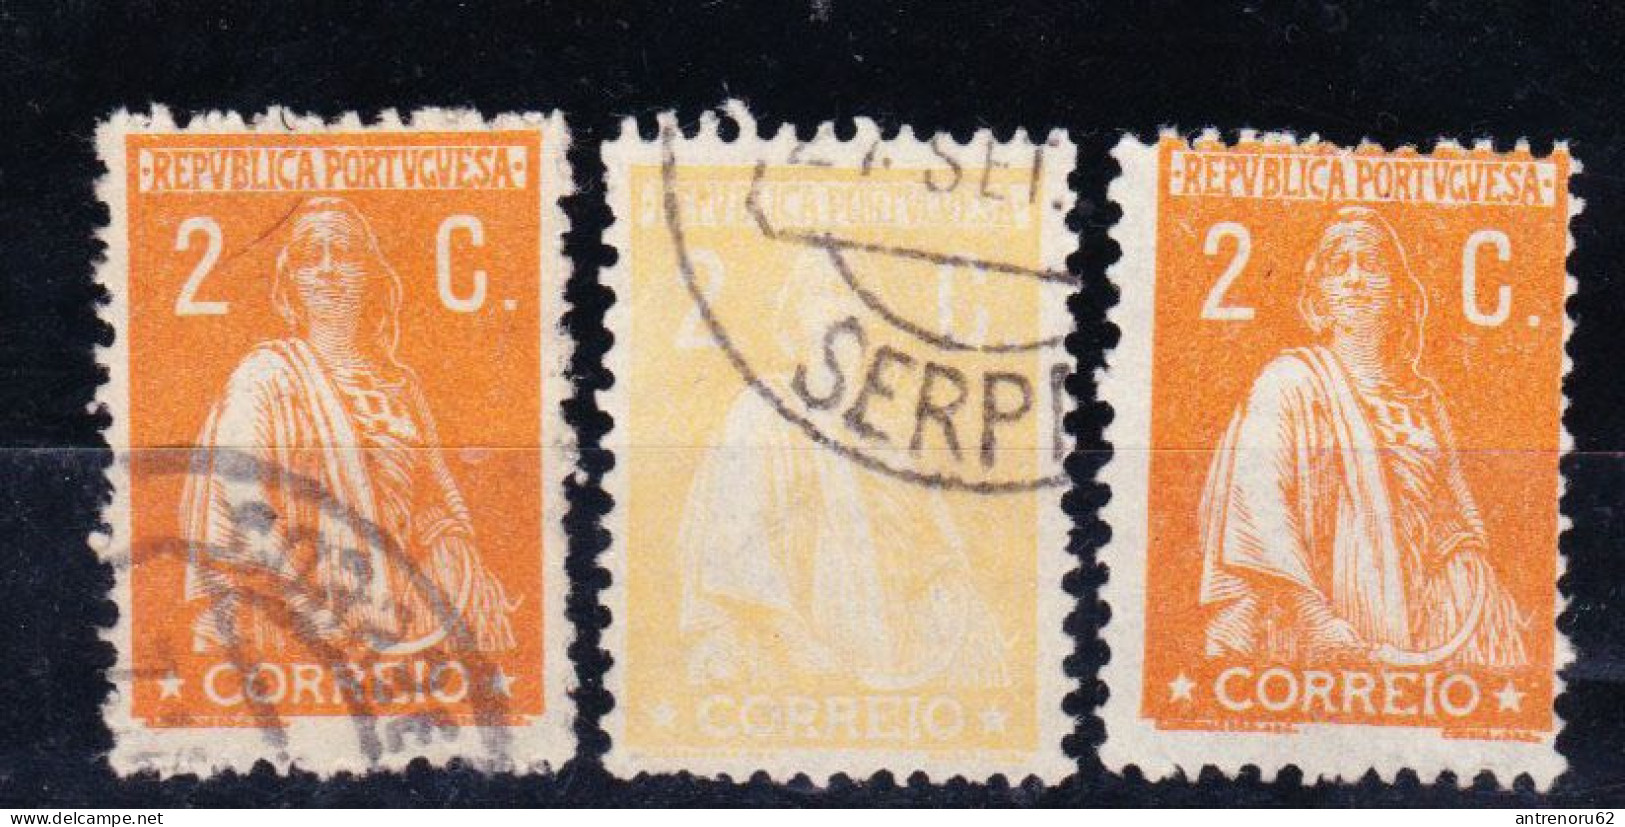 STAMPS-1917-PORTUGAL-ERROR-USED(NORMAL IS ORANGE)-SEE-SCAN - Ungebraucht